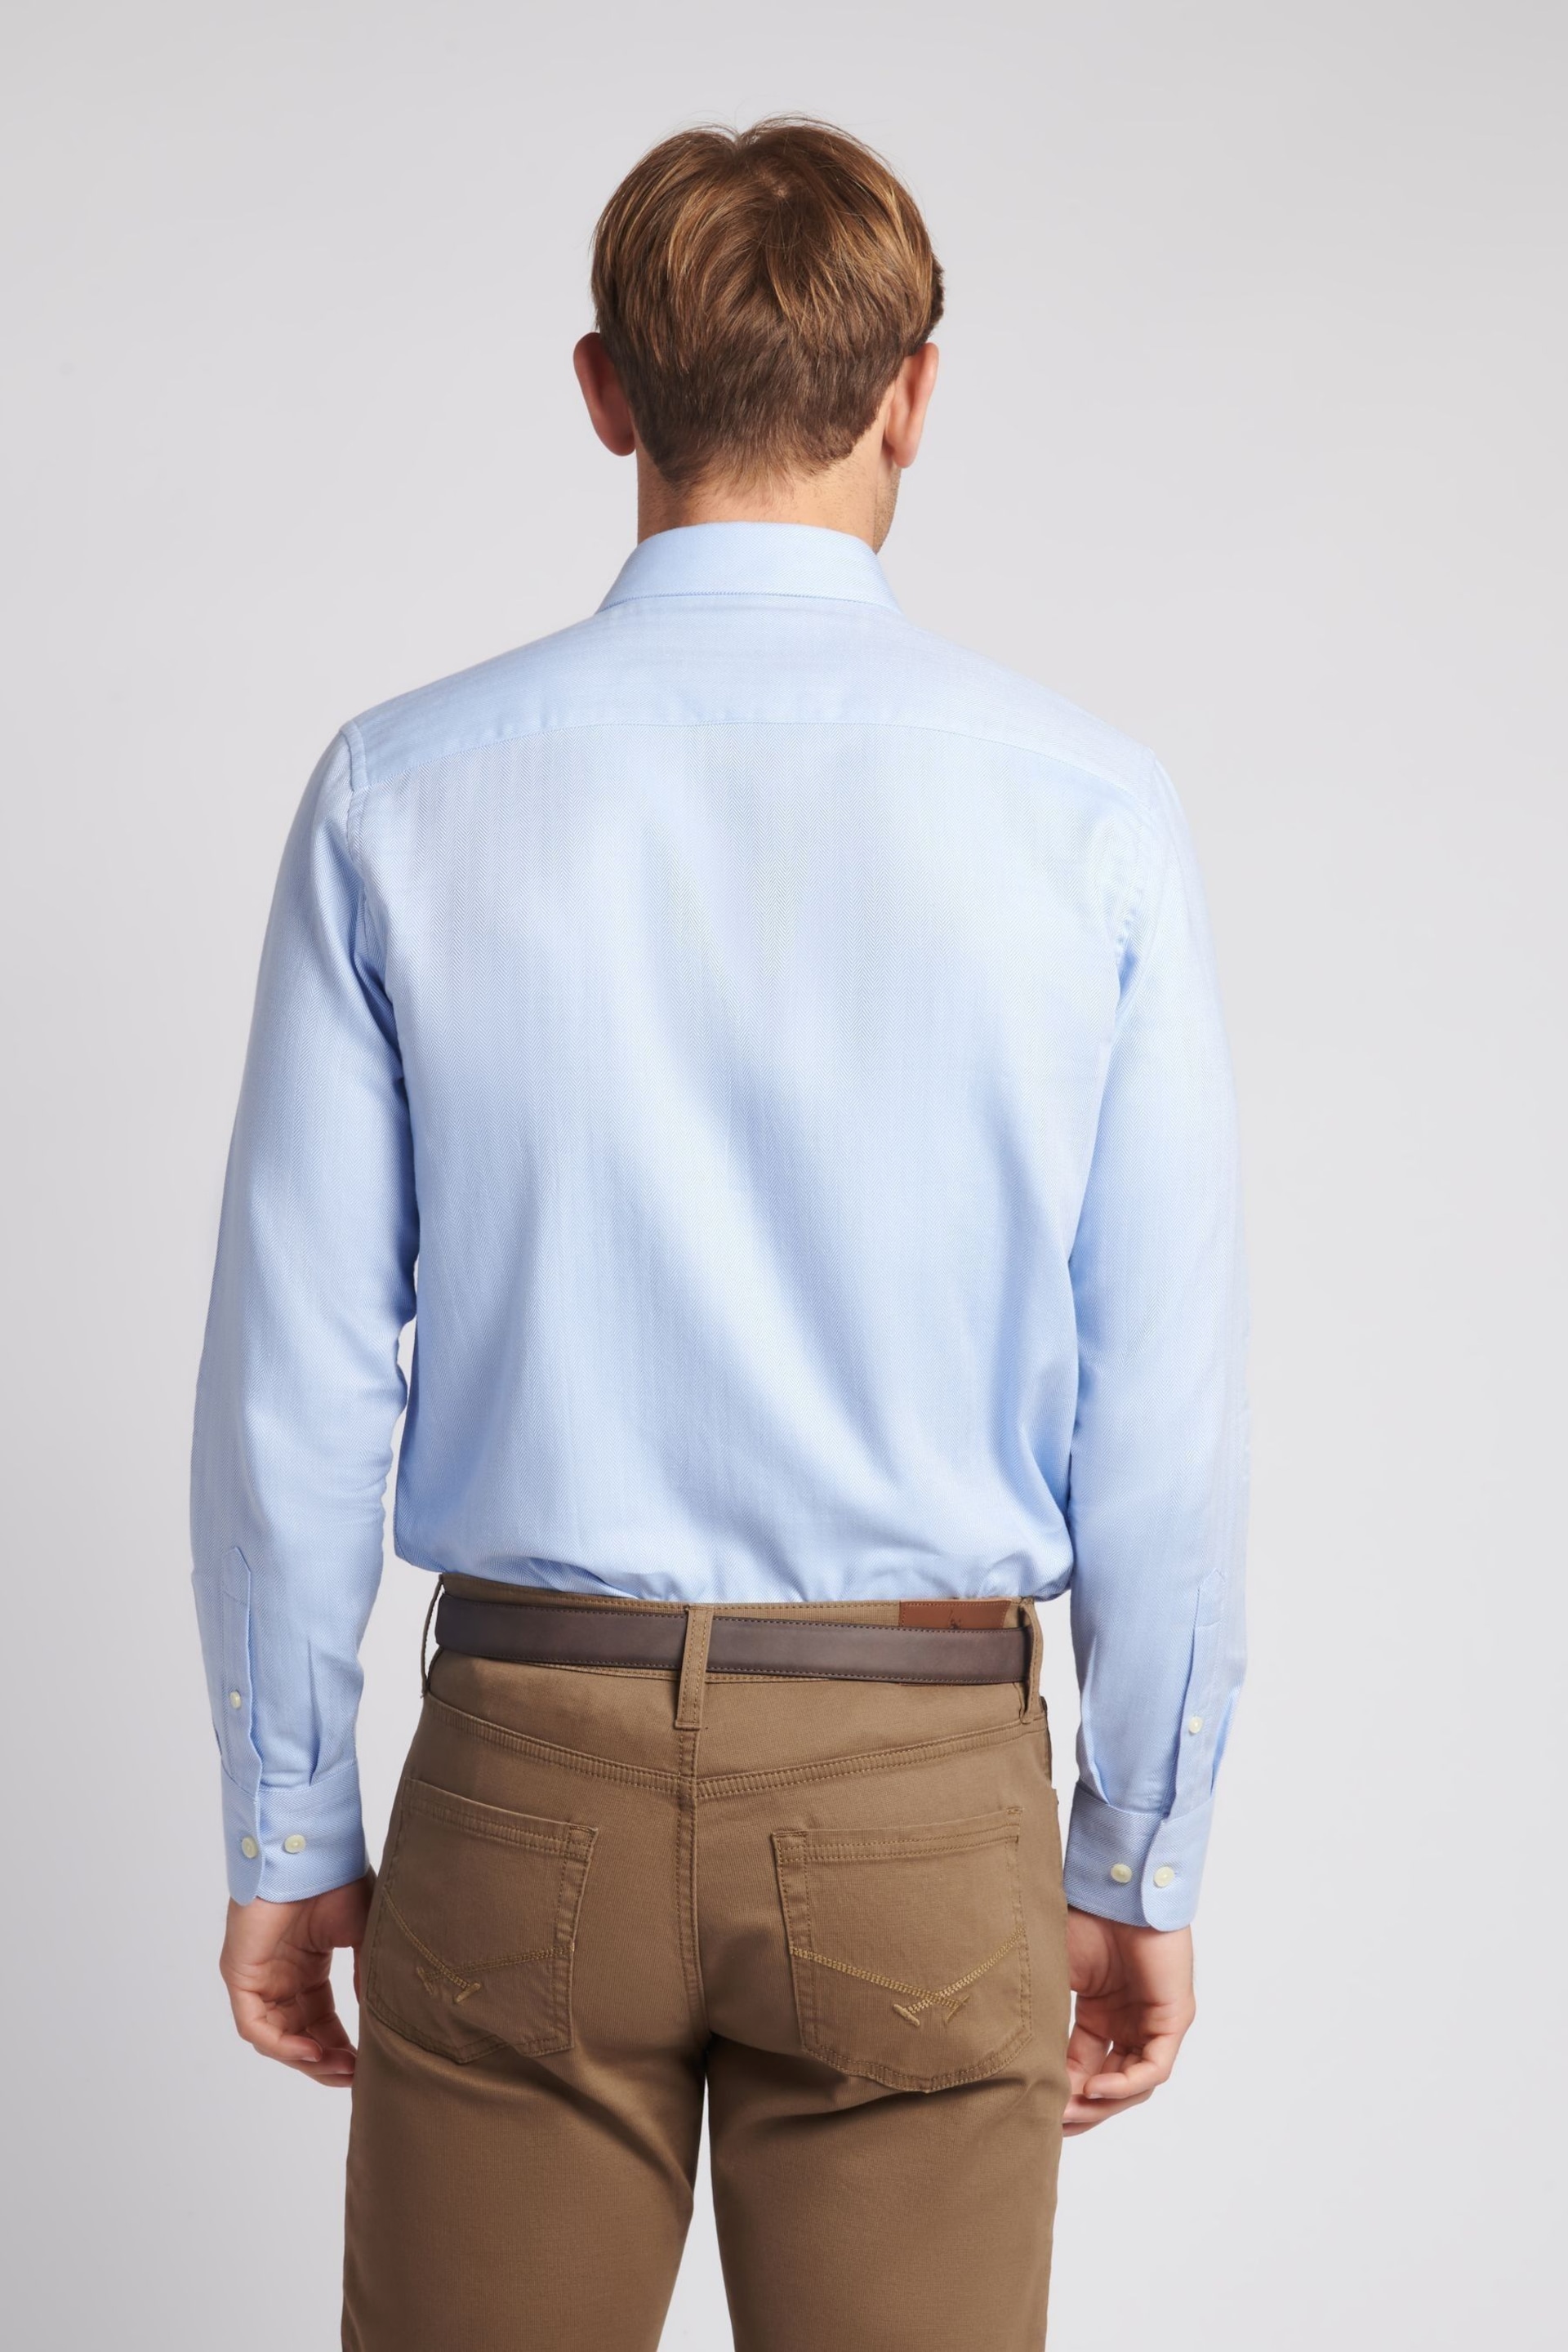 U.S. Polo Assn. Mens Long Sleeve Herringbone Twill White Shirt - Image 4 of 8